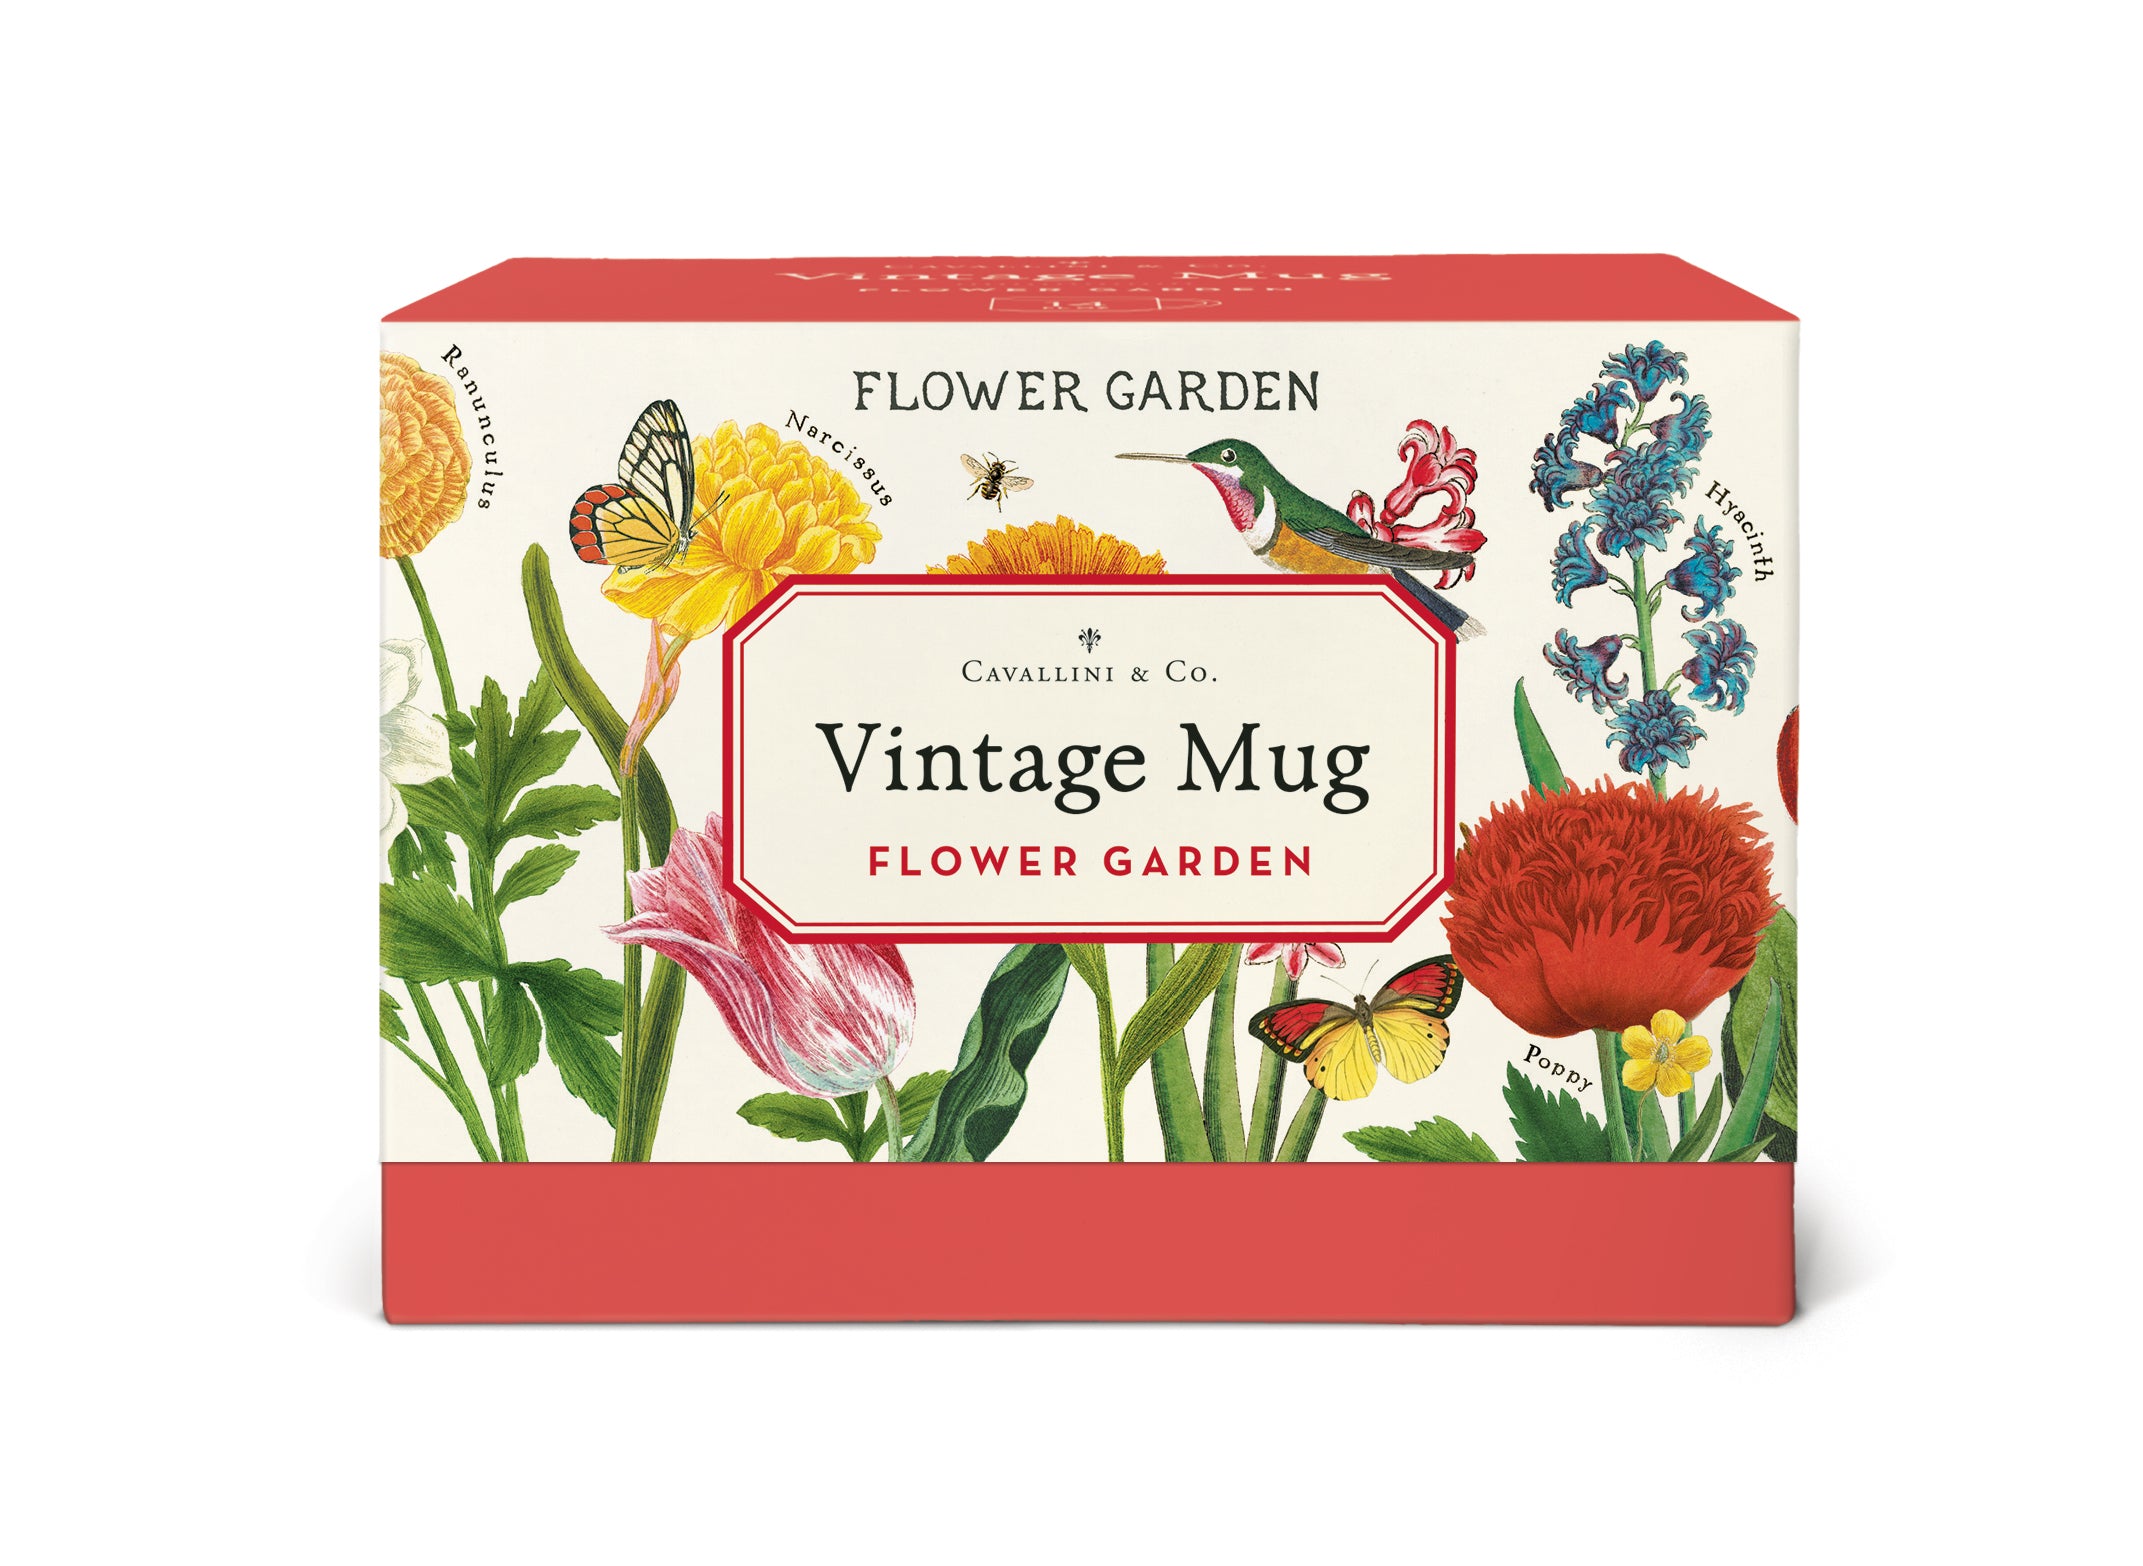 image of packaging from Cavallini & Co. Flower Garden Ceramic Mug